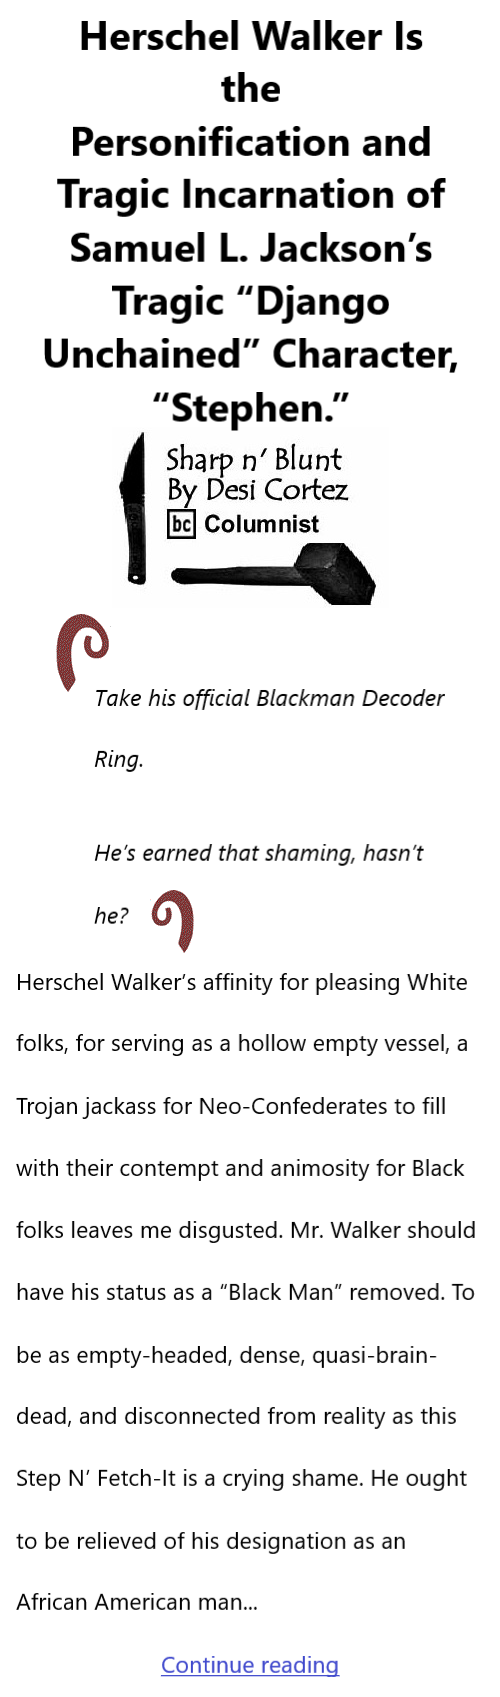 BlackCommentator.com Oct 13, 2022 - Issue 927: Herschel Walker Is the Personification and Tragic Incarnation of Samuel L. Jackson’s Tragic “Django Unchained” Character “Stephen.” - Sharp n' Blunt By Desi Cortez, BC Columnist